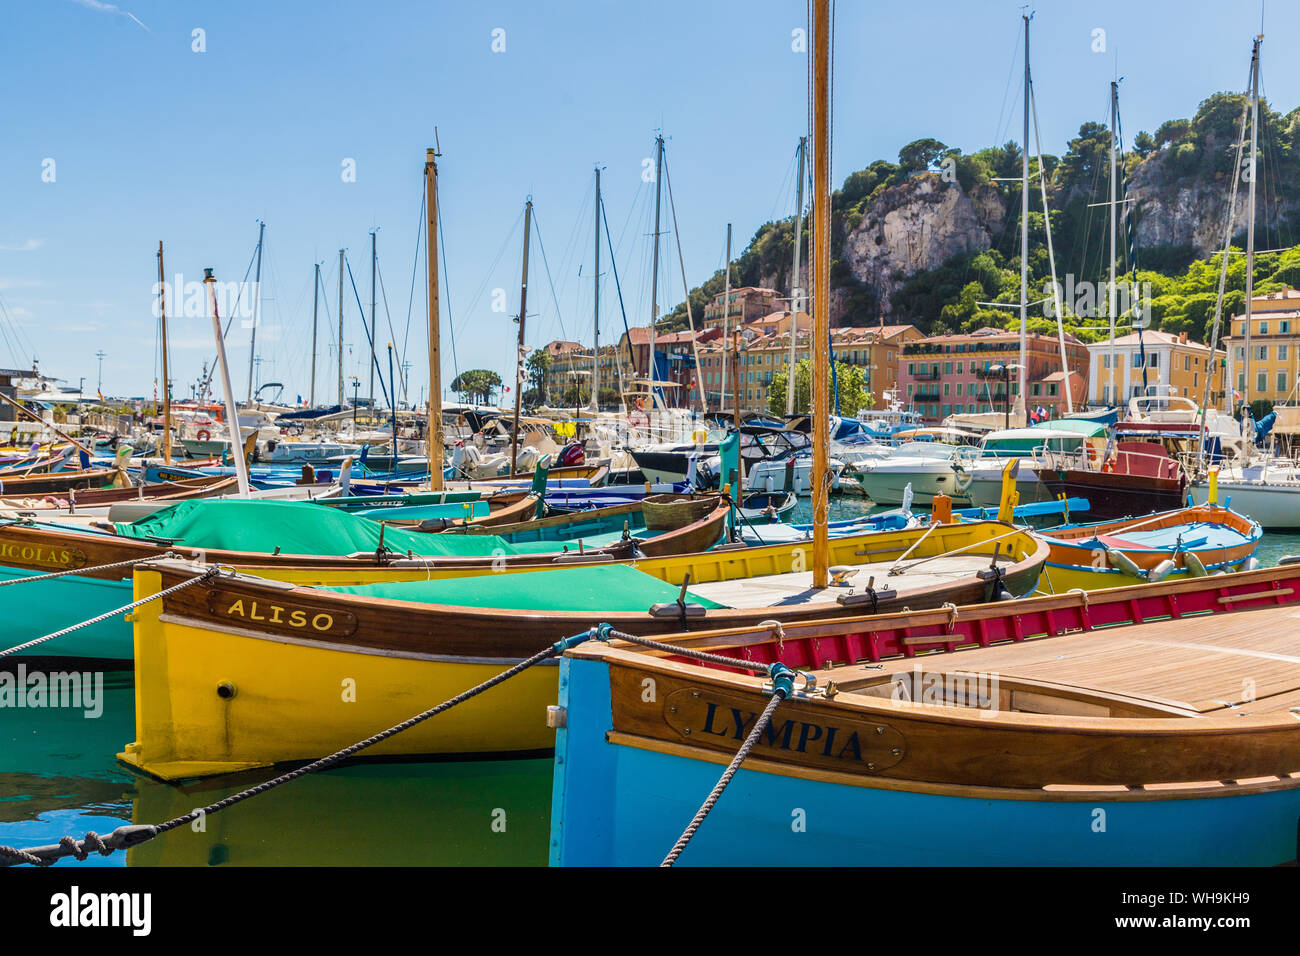 Port Lympia, Nizza, Alpes Maritimes, Cote d'Azur, Provence, Côte d'Azur, Frankreich, Mittelmeer, Europa Stockfoto